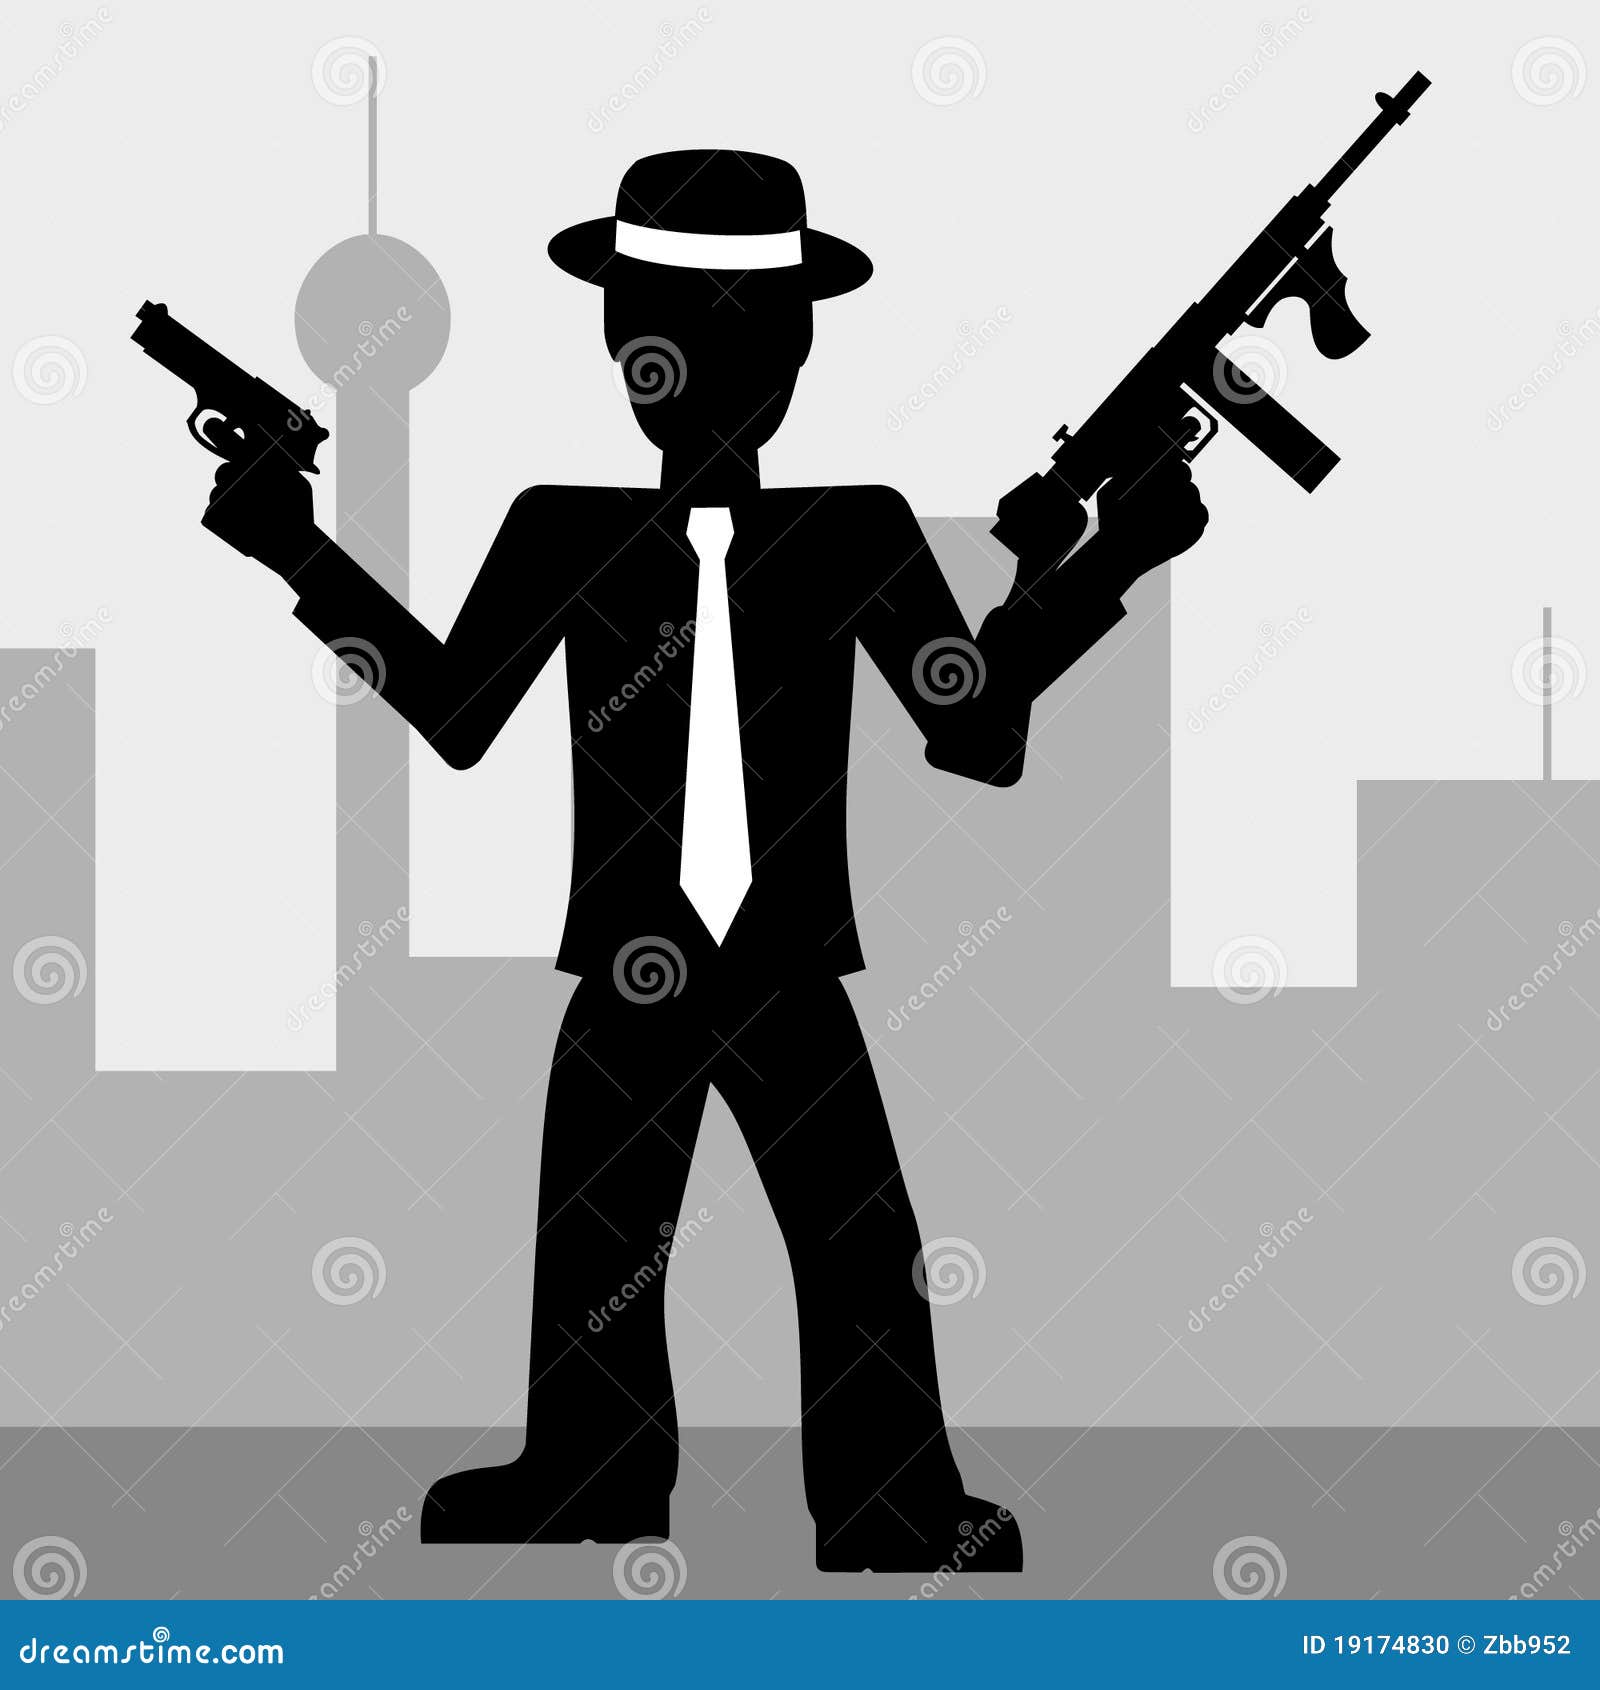 mafia man with guns